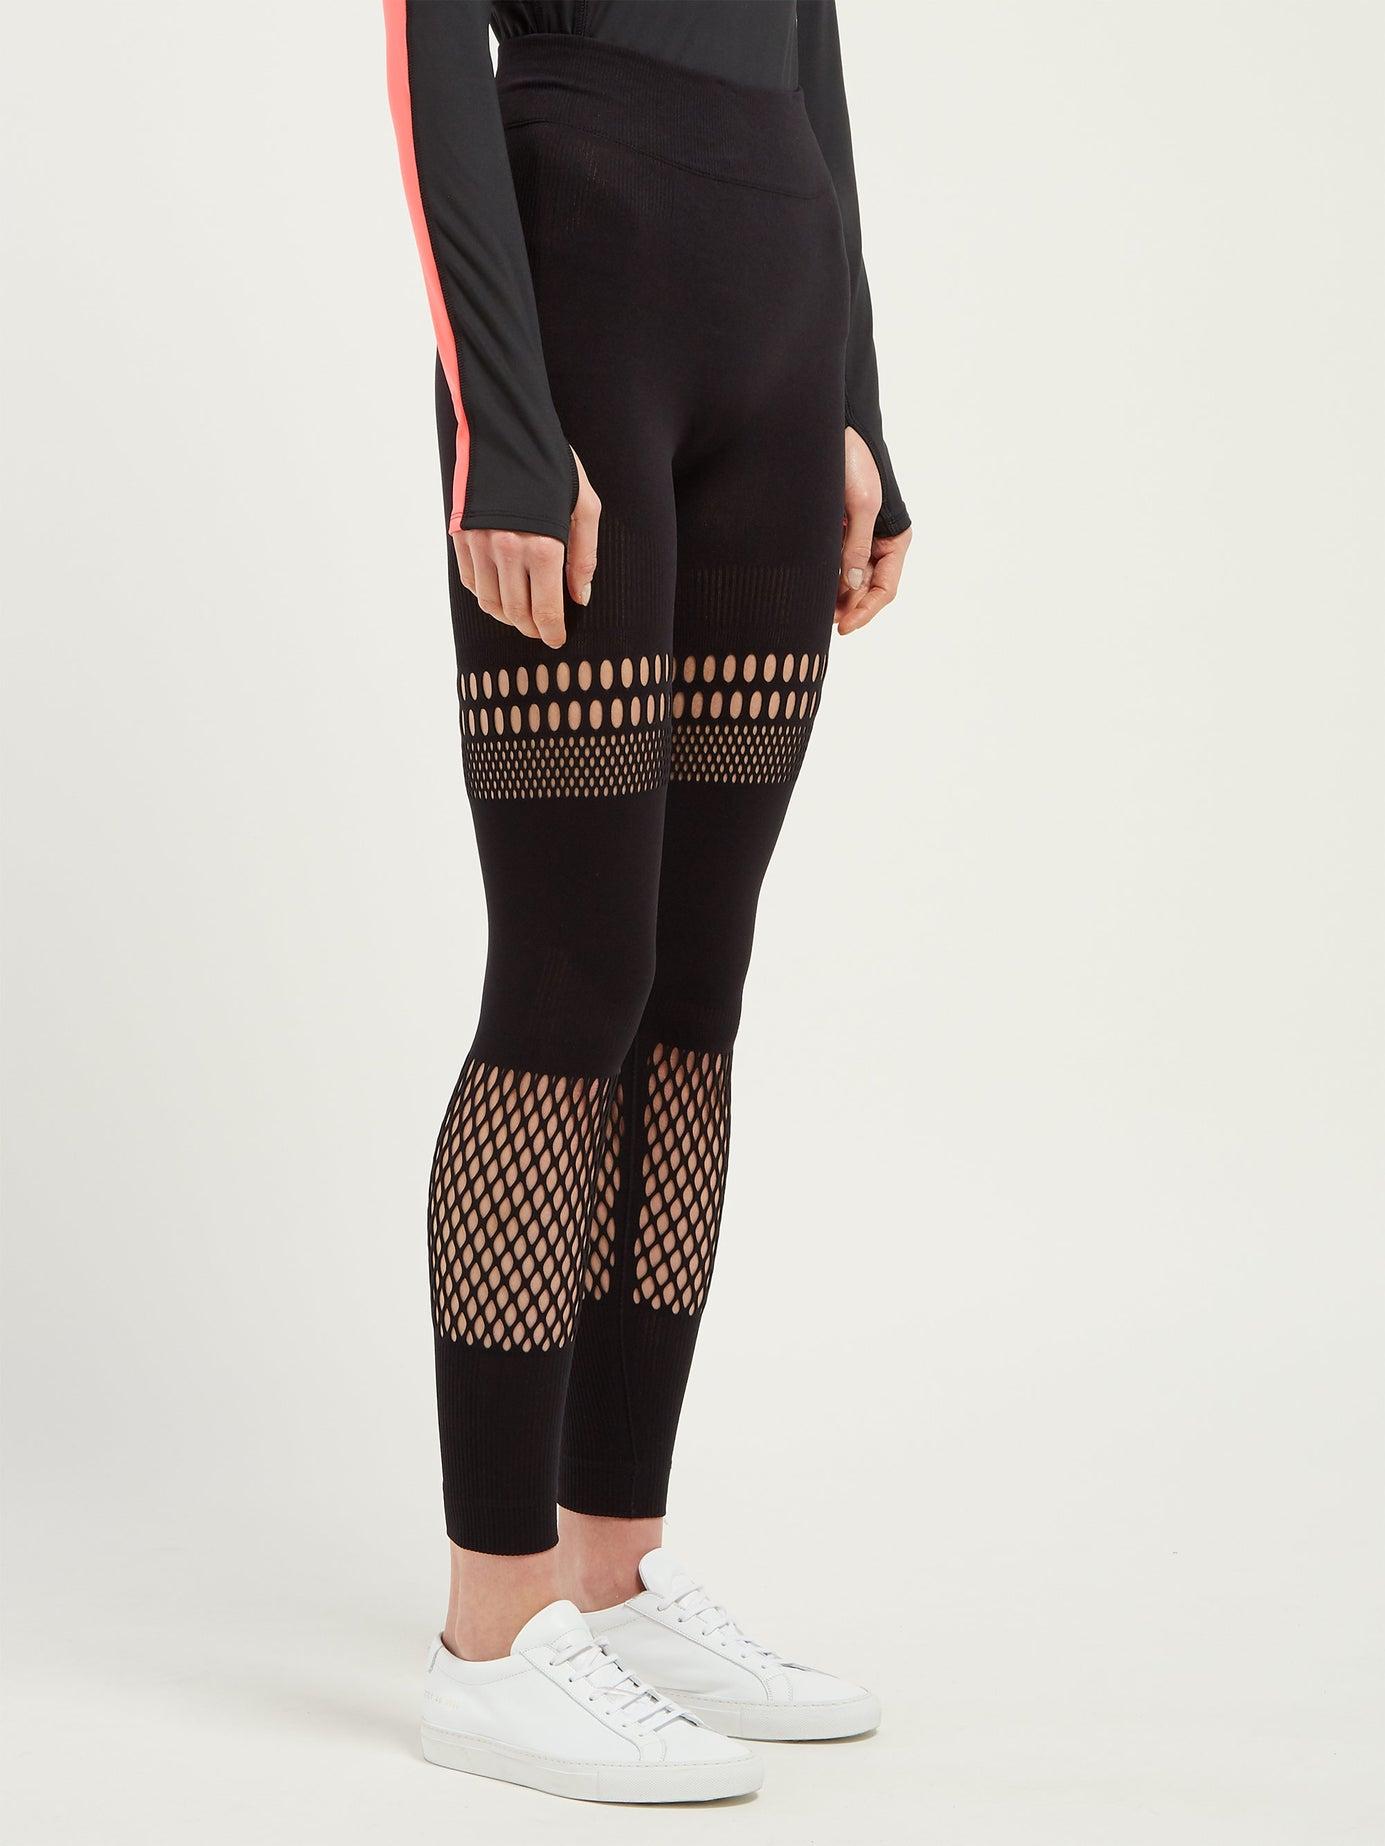 adidas By Stella McCartney Warp Knit Laser-cut Leggings in Black - Lyst